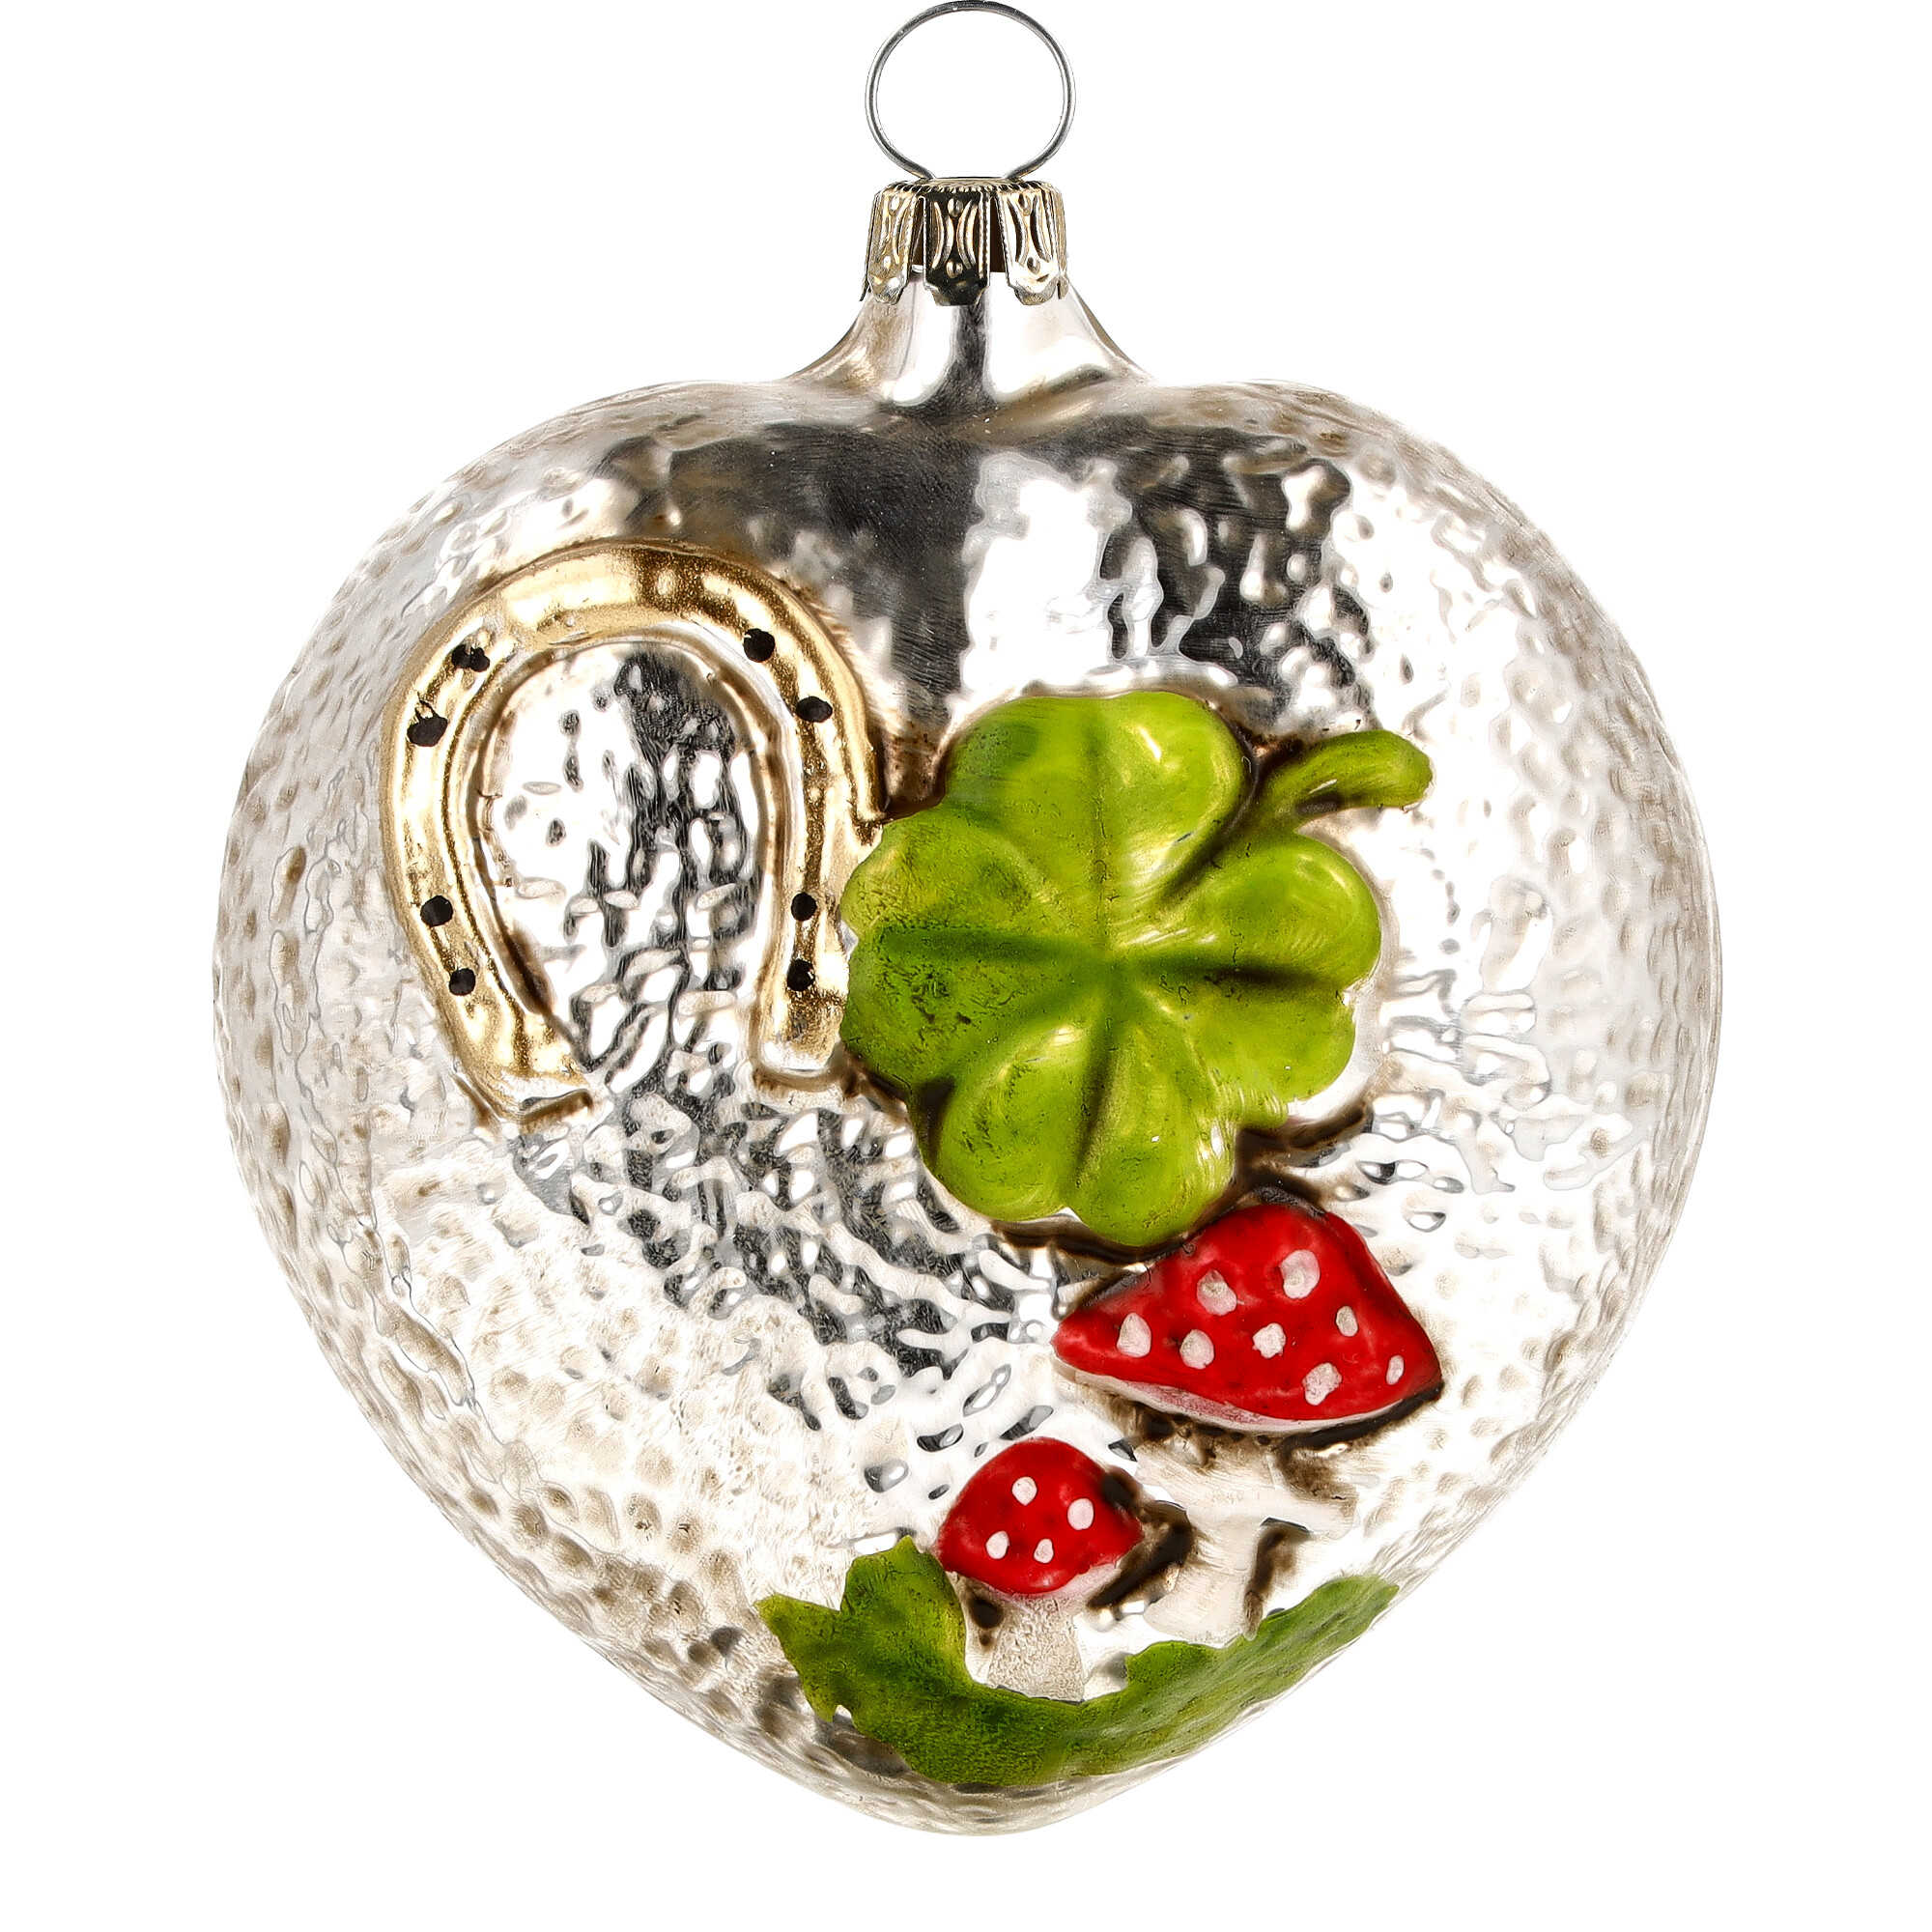 Retro Vintage style Christmas Glass Ornament - Lucky heart